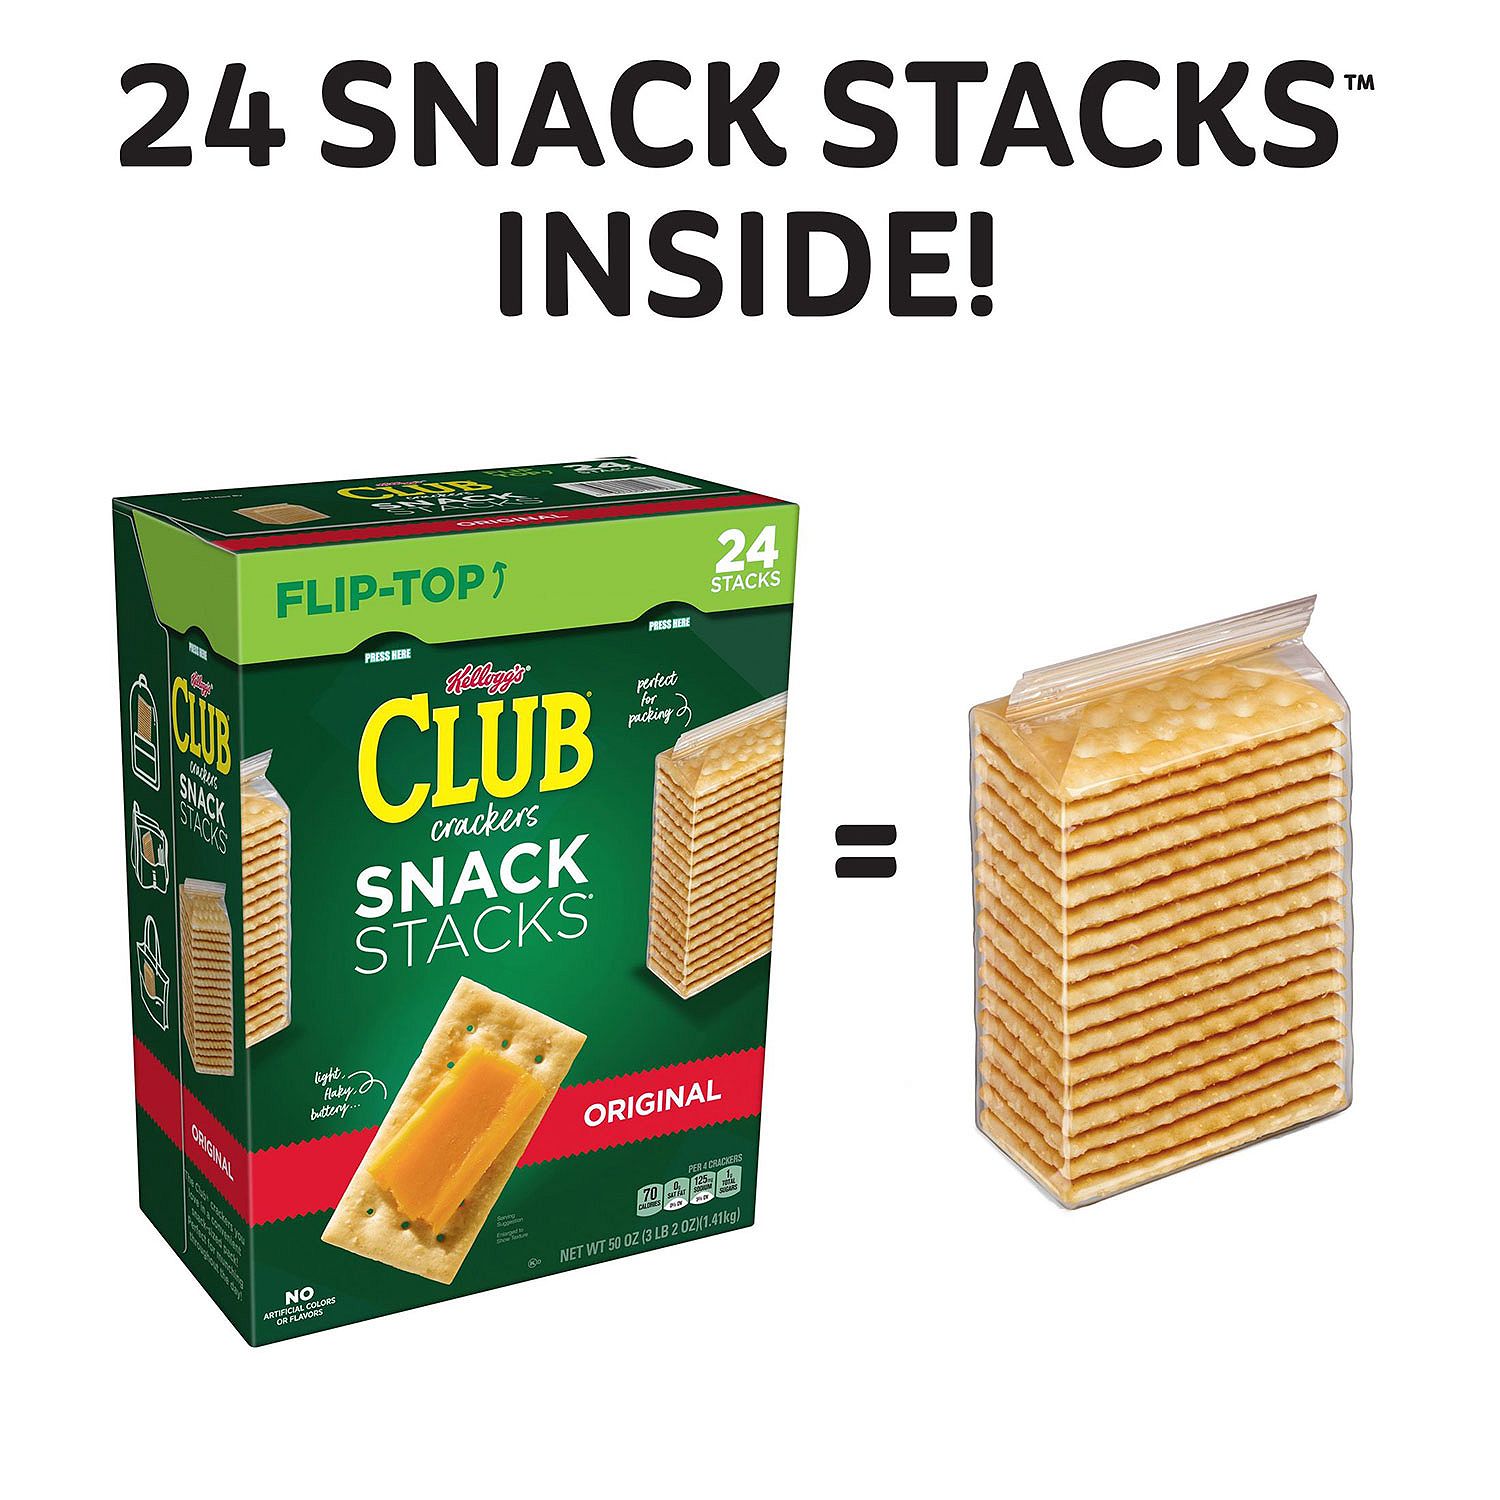 Keebler Club Crackers Snack Stacks (2.08 oz., 24 pk.) - image 2 of 2